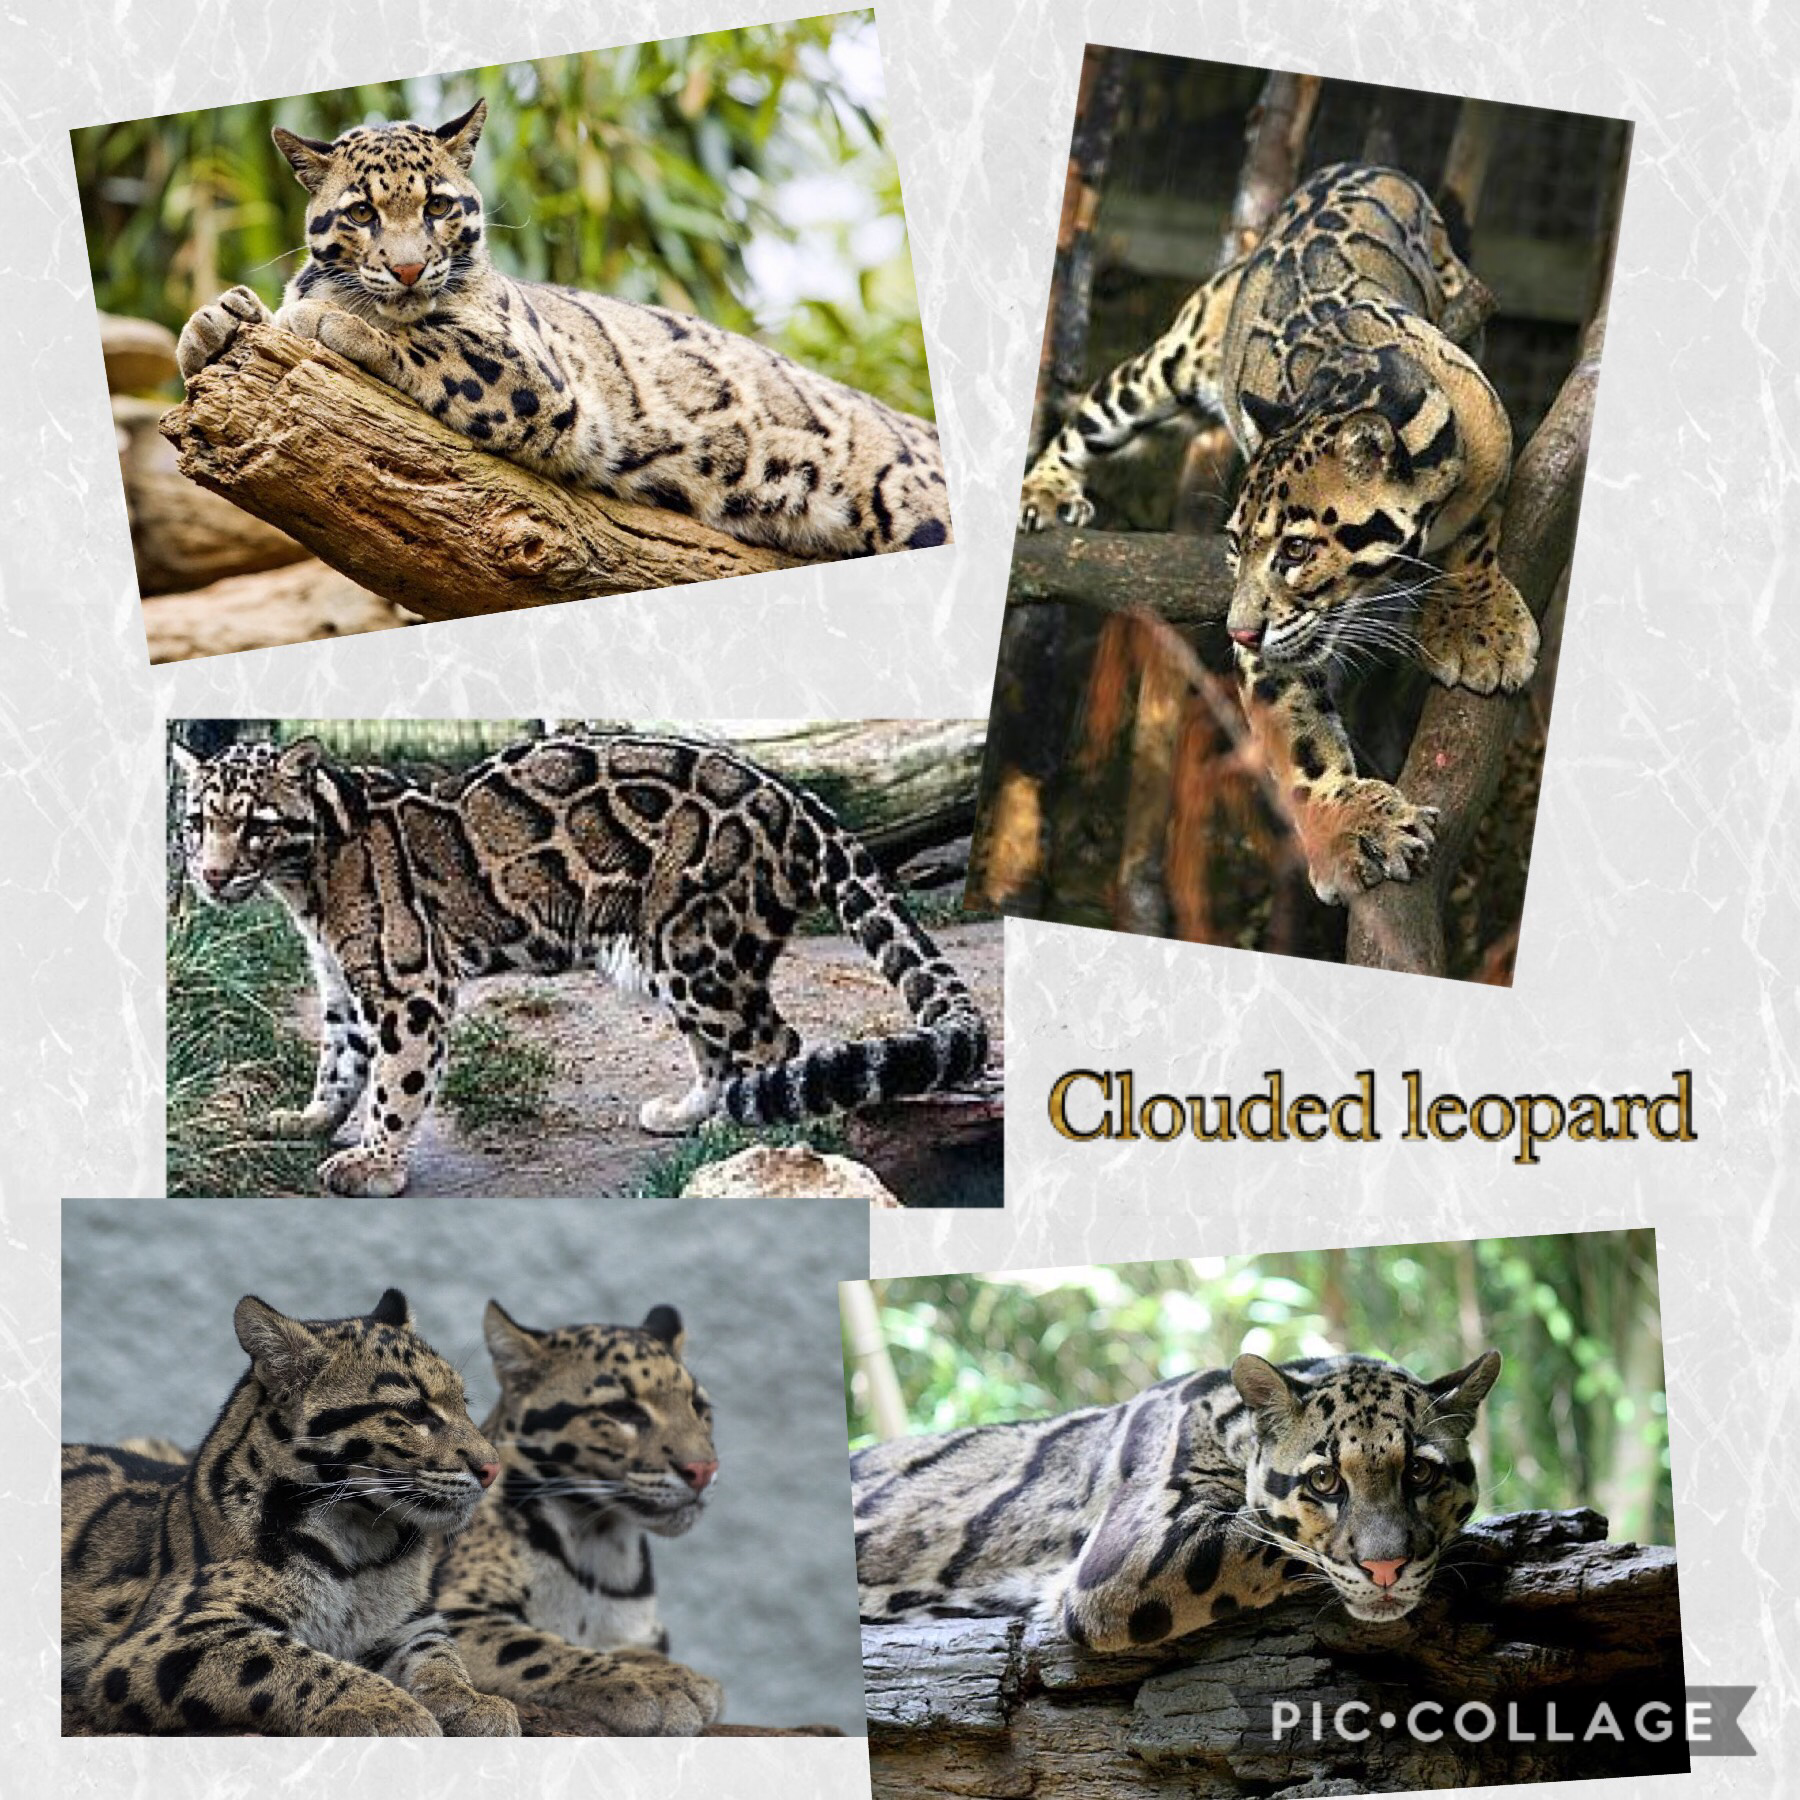 Clouded leopard 